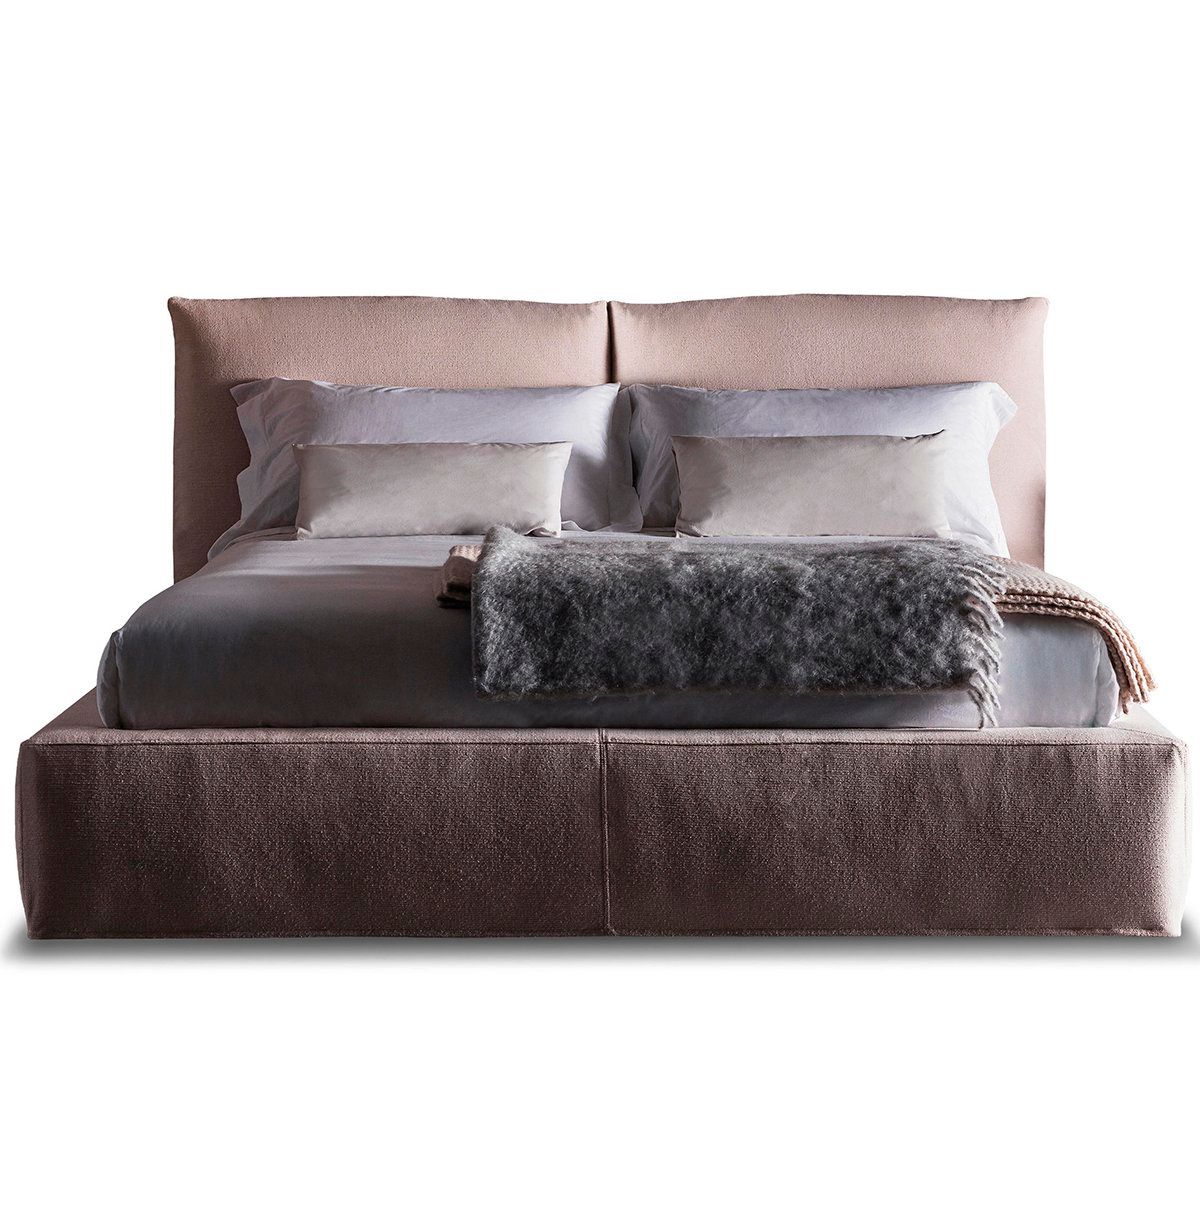 Double bed 180x200 cm beige Soap